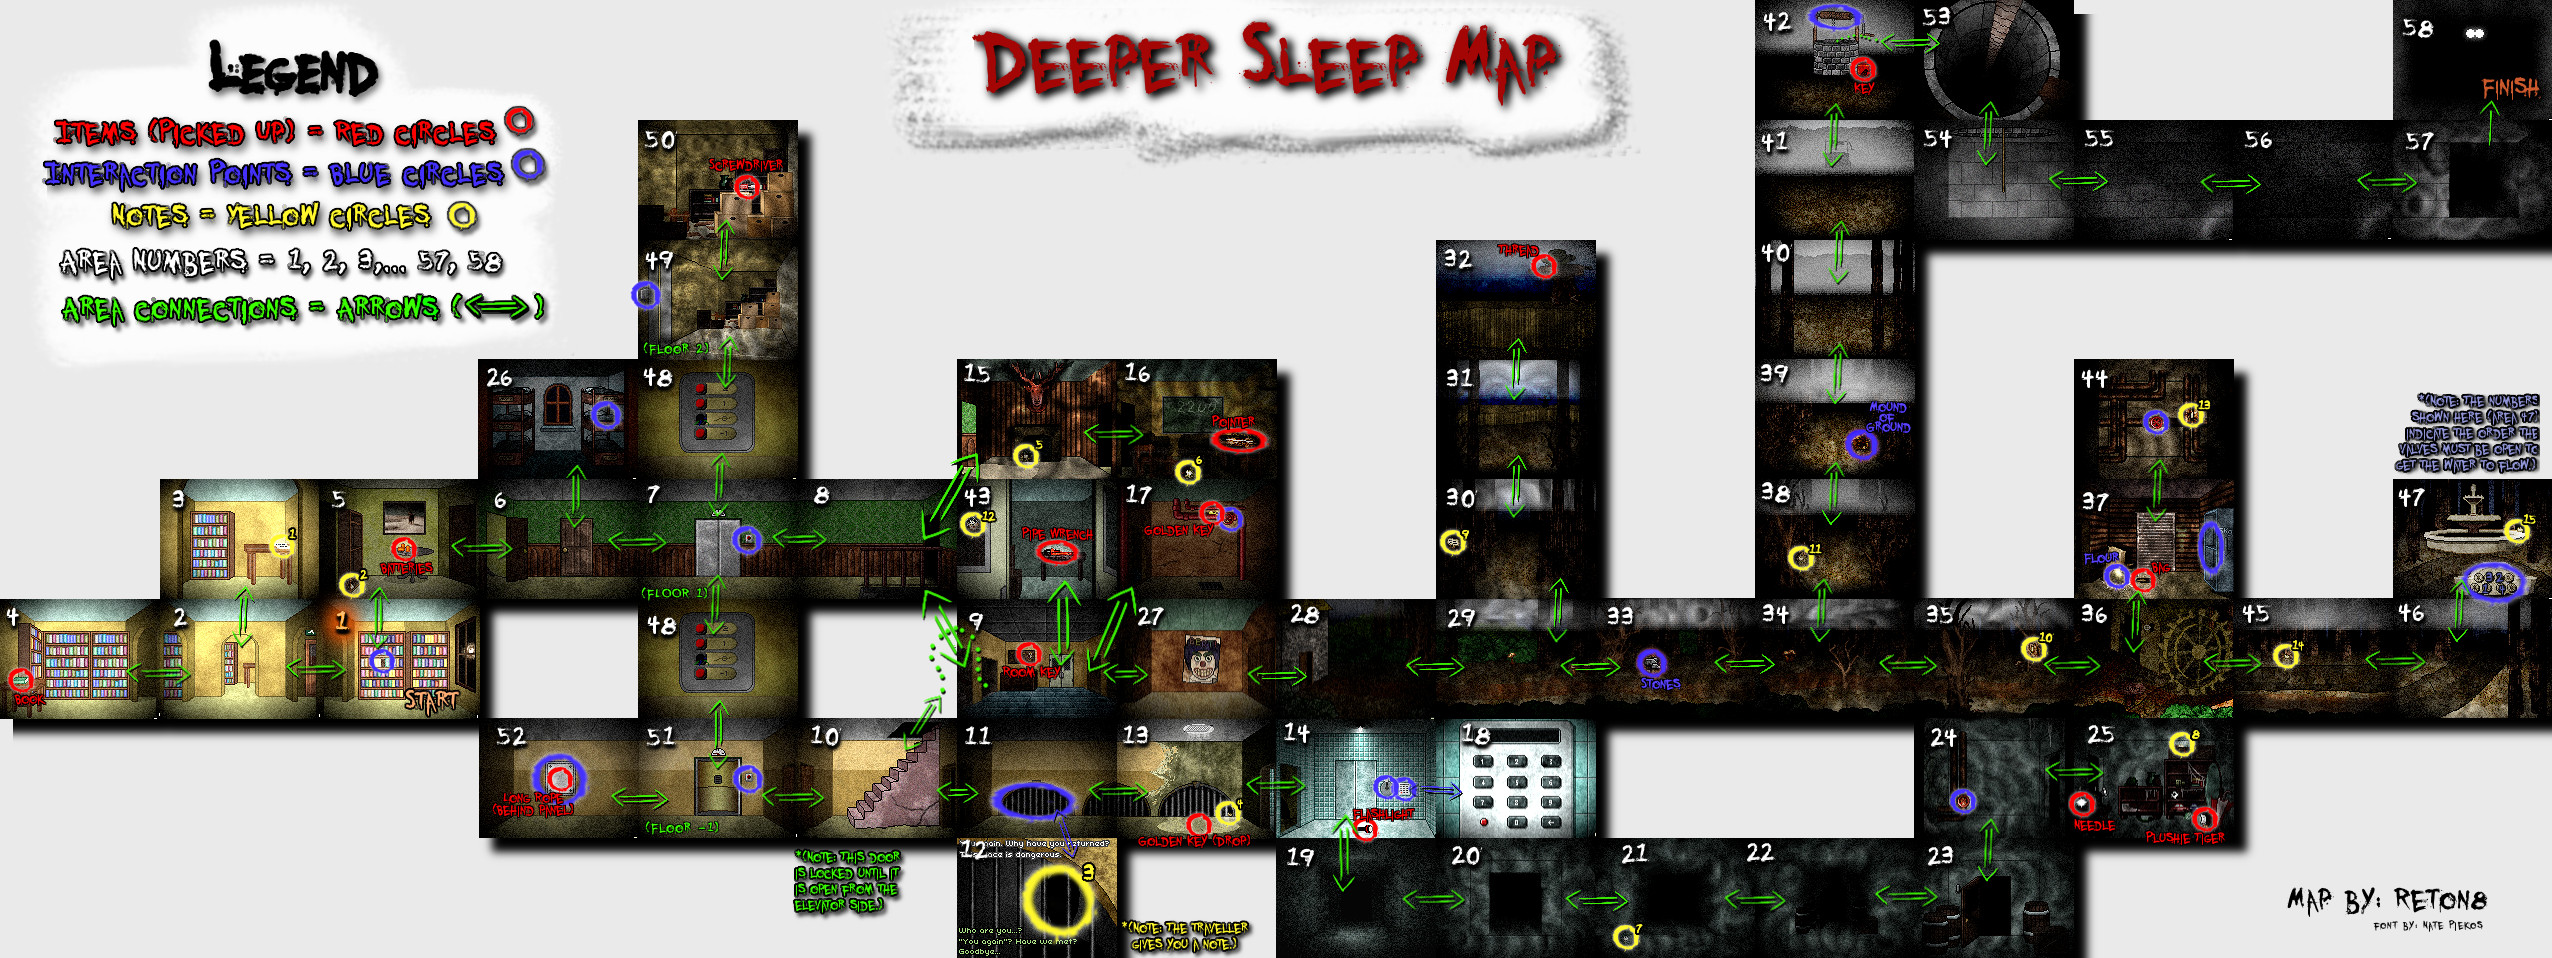 Deeper Sleep Map Walkthrough Secrets And All 15 Note Locations